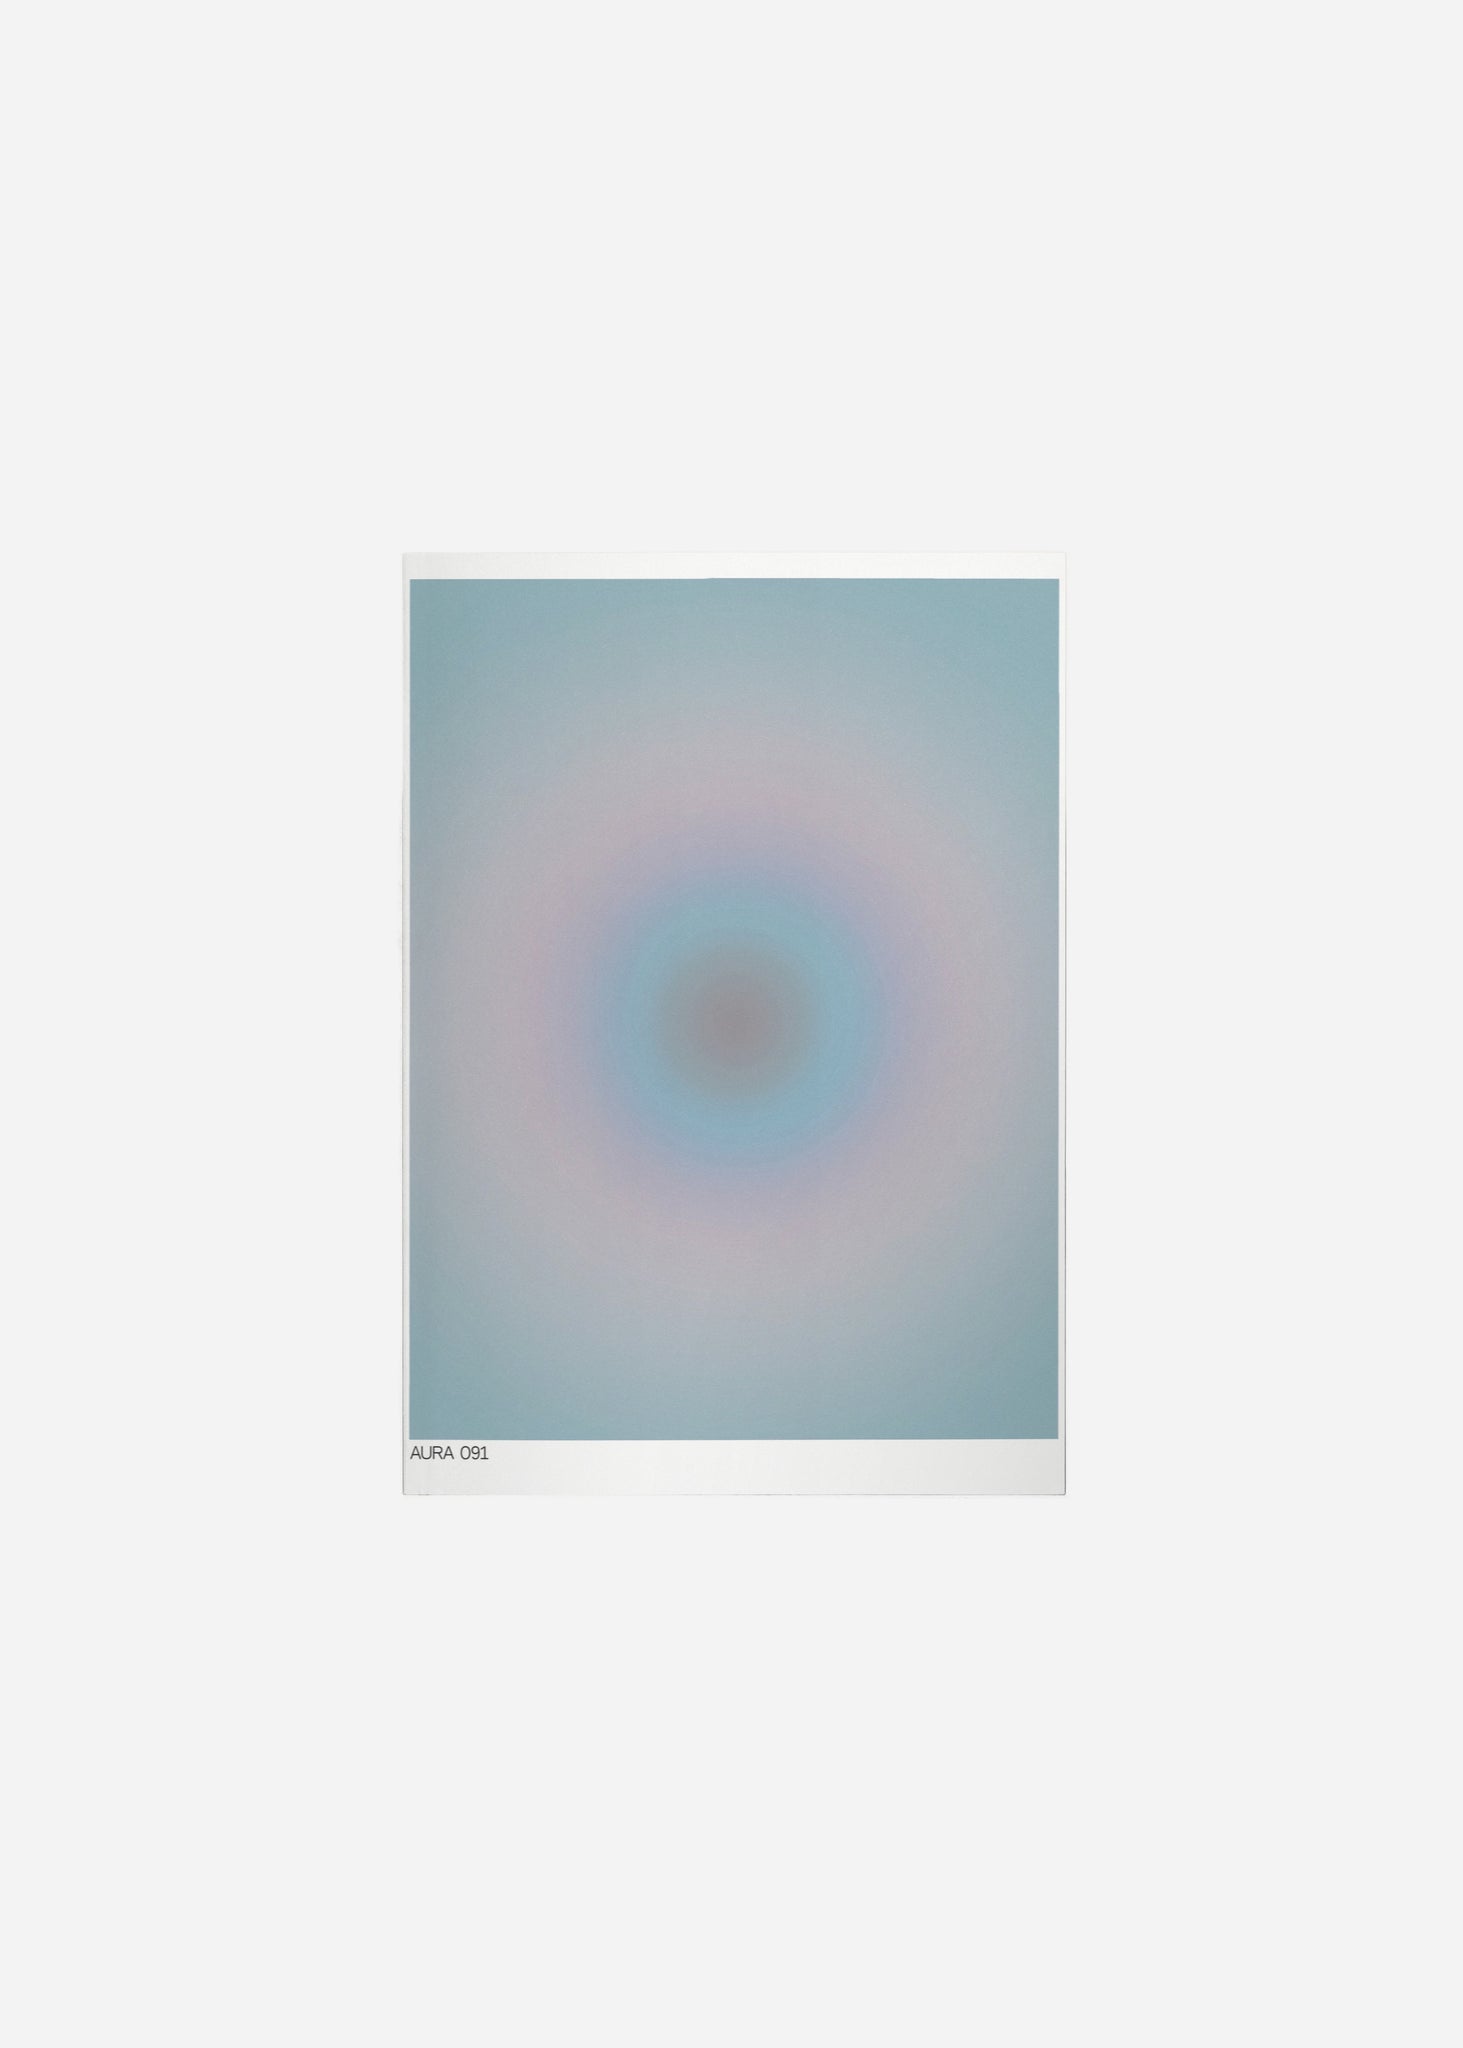 aura 091 Fine Art Print